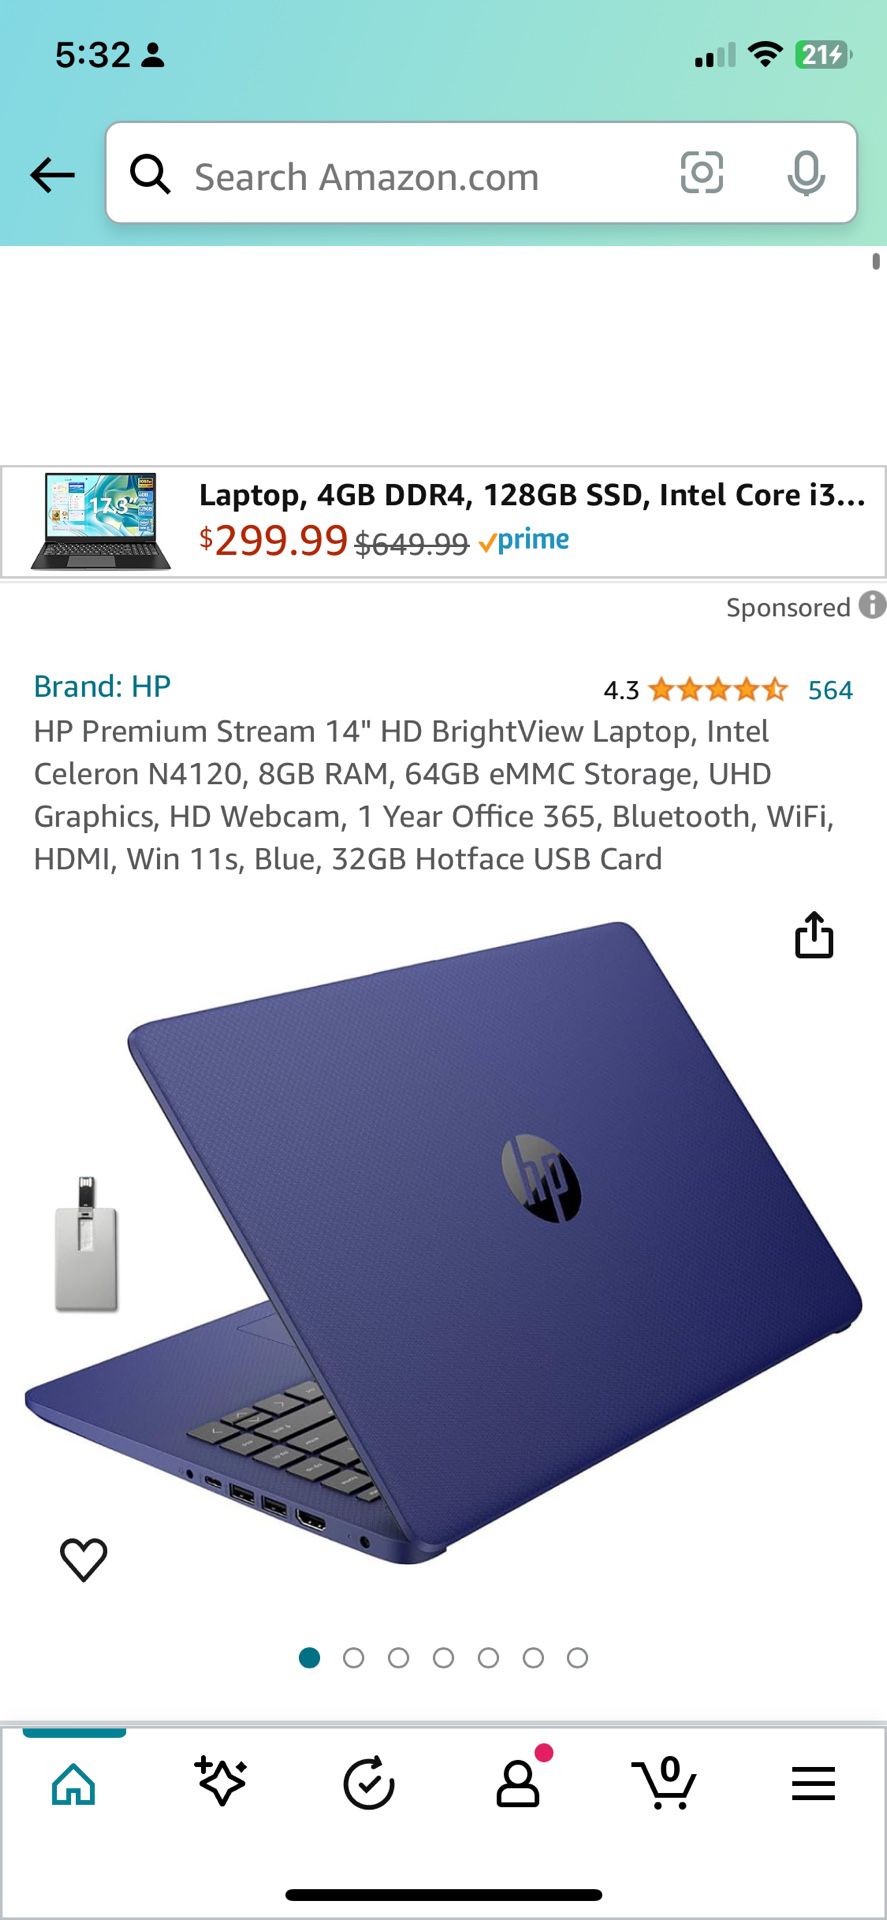 HP Premium Stream 14 “ HD Bright View Laptop